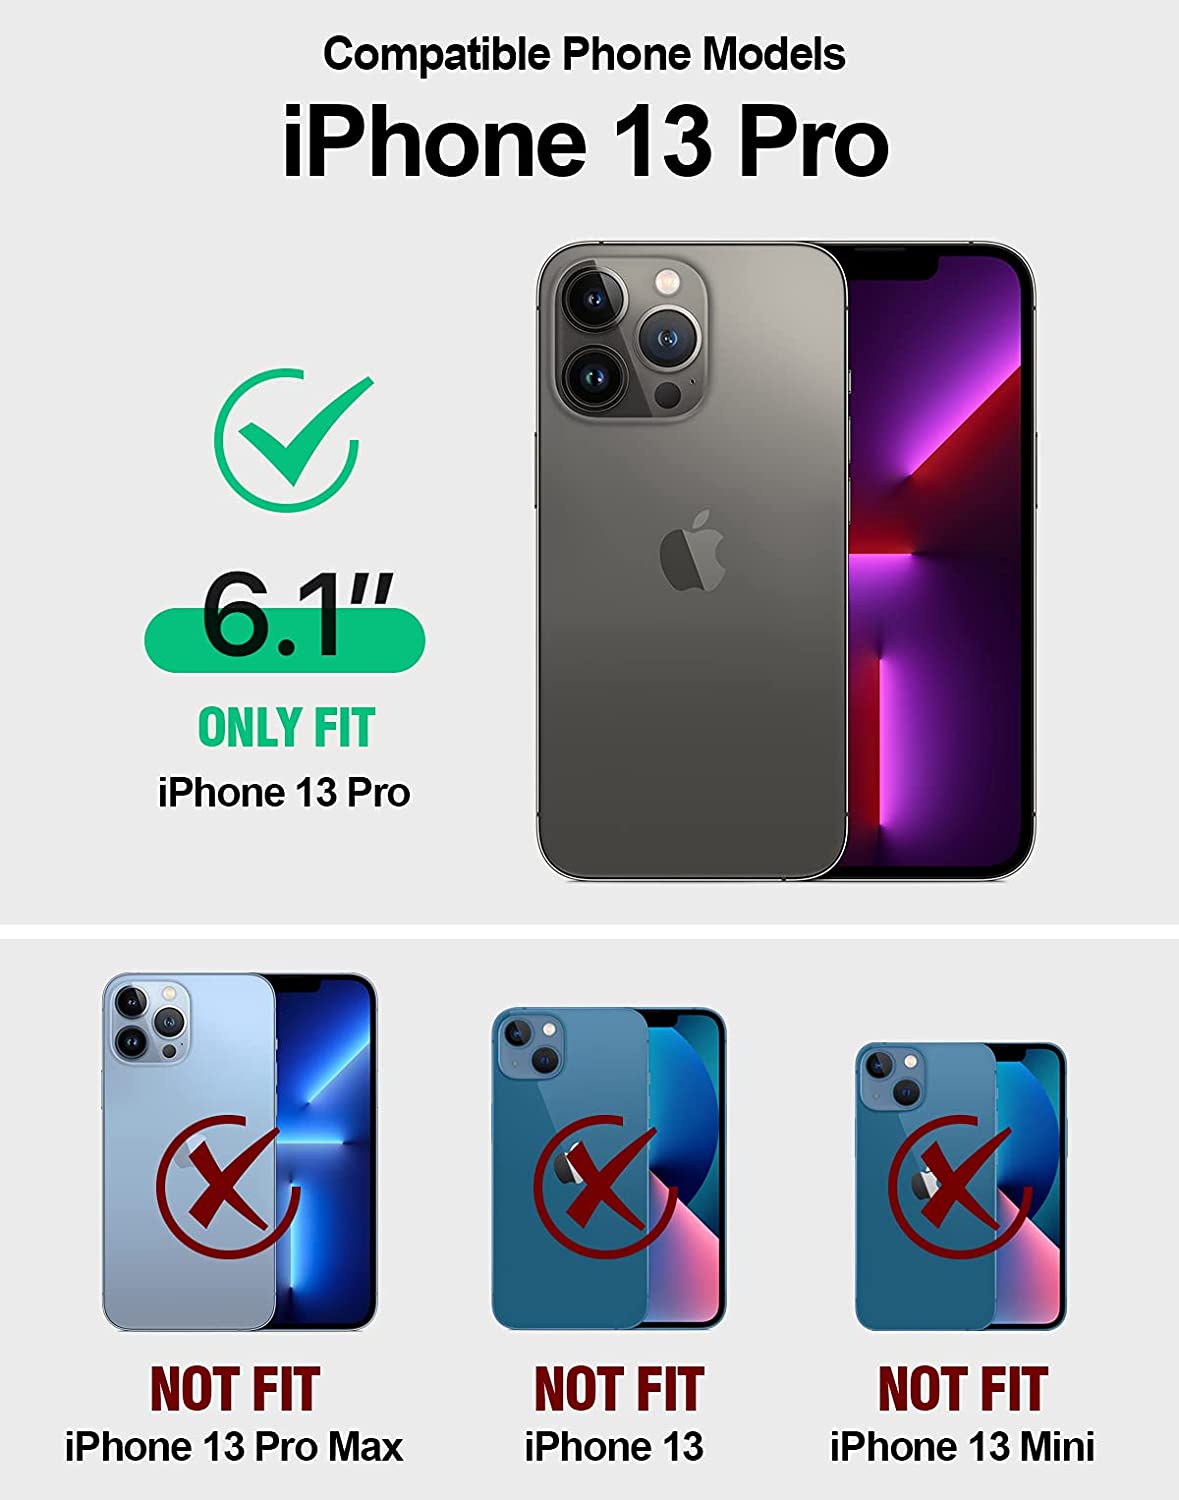 Apple iPhone 13 Pro Case